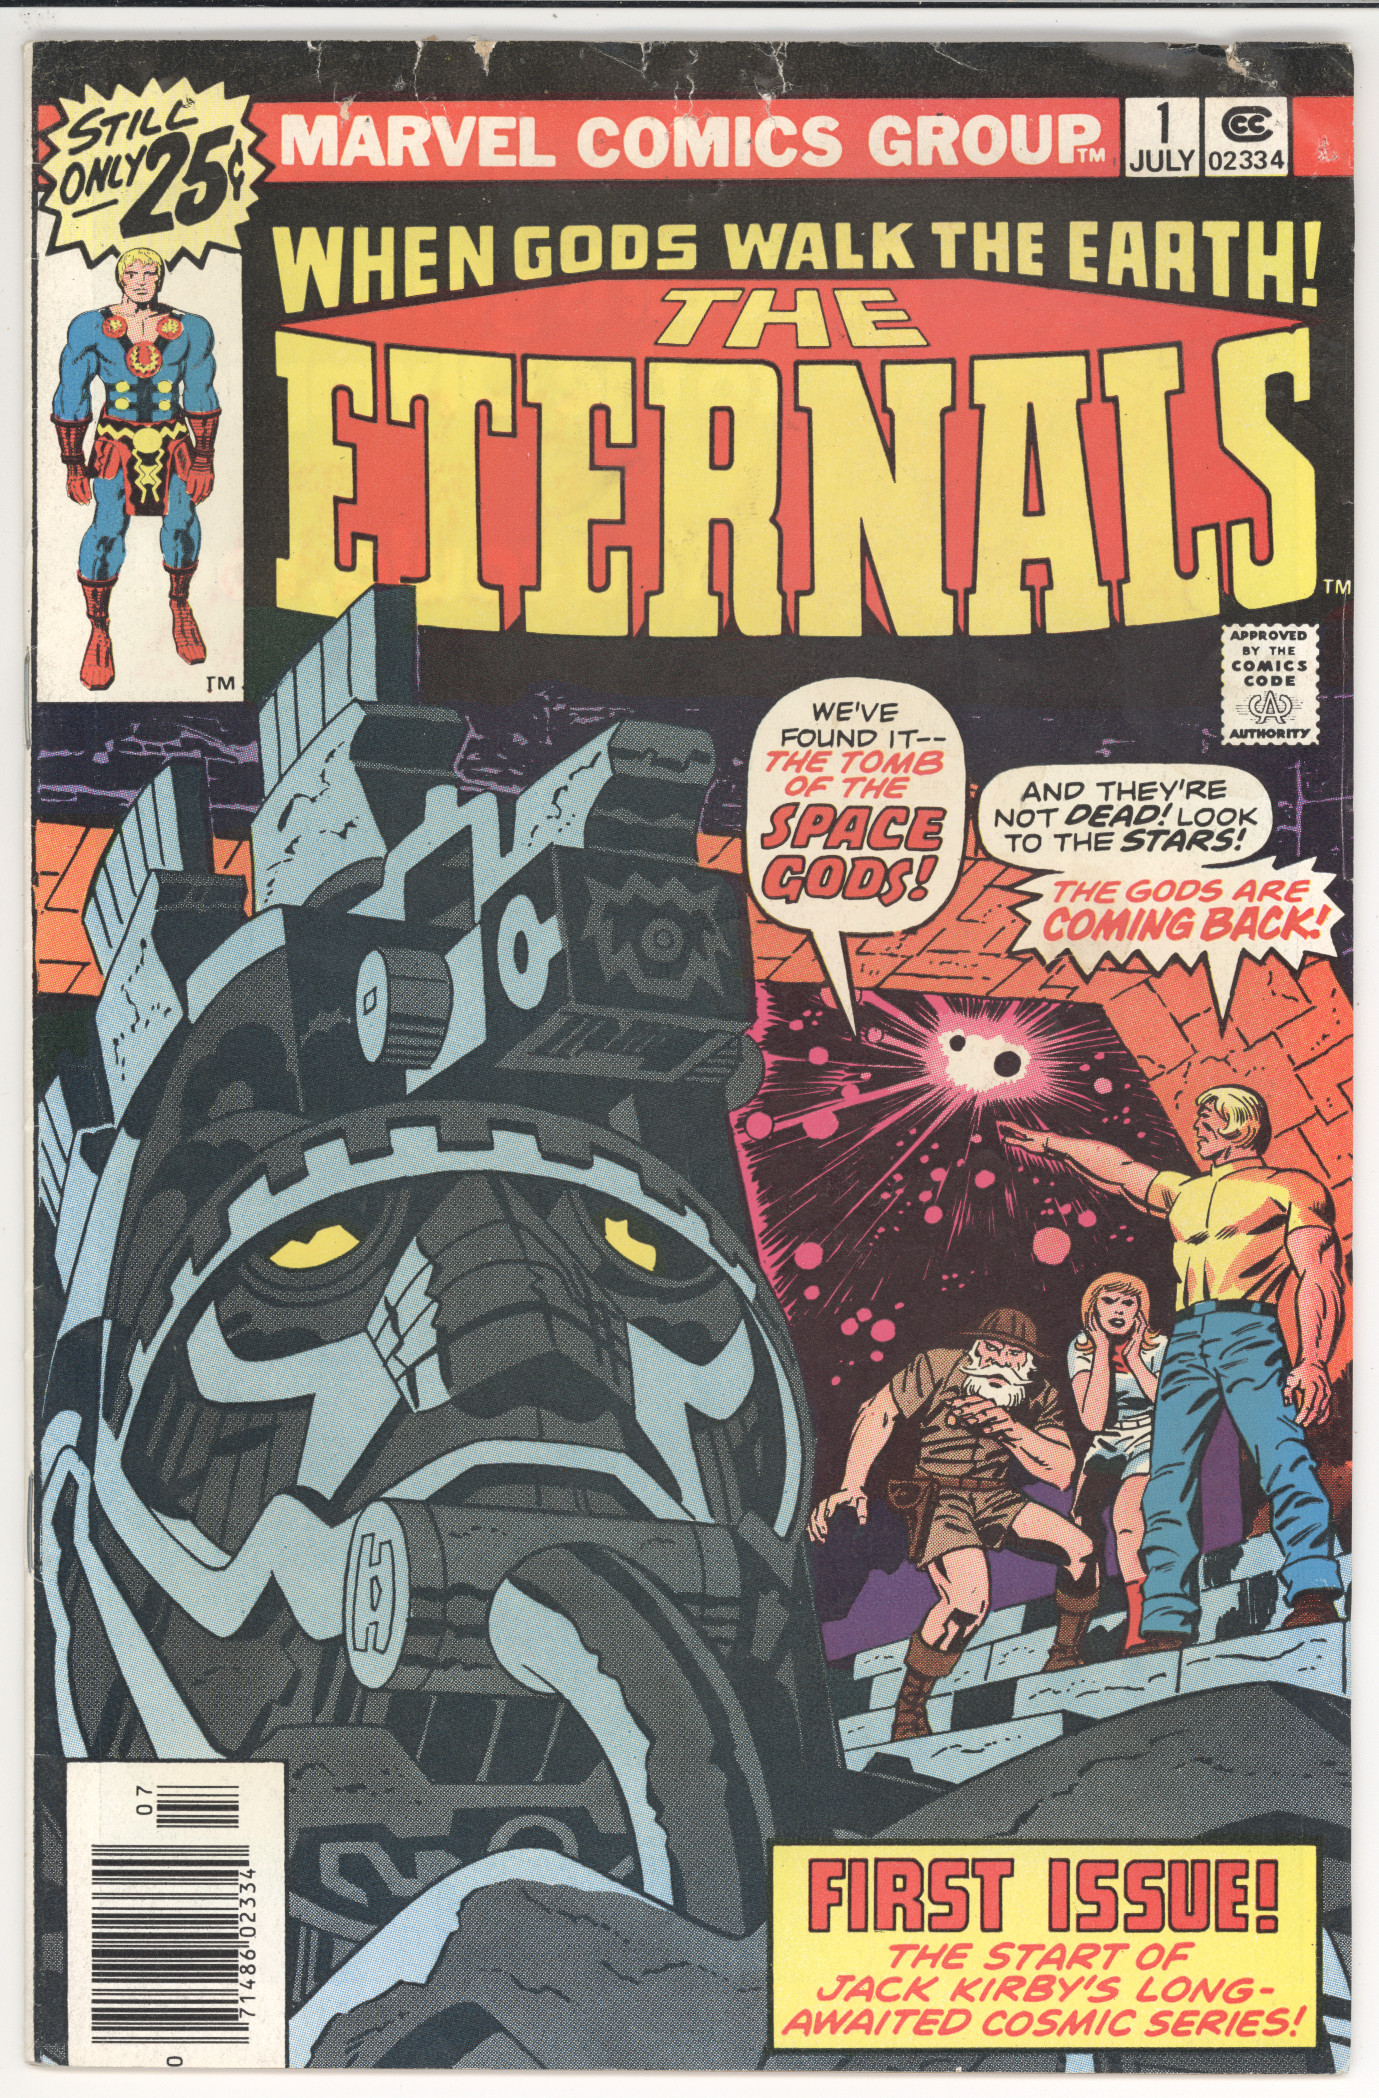 The Eternals #1 front